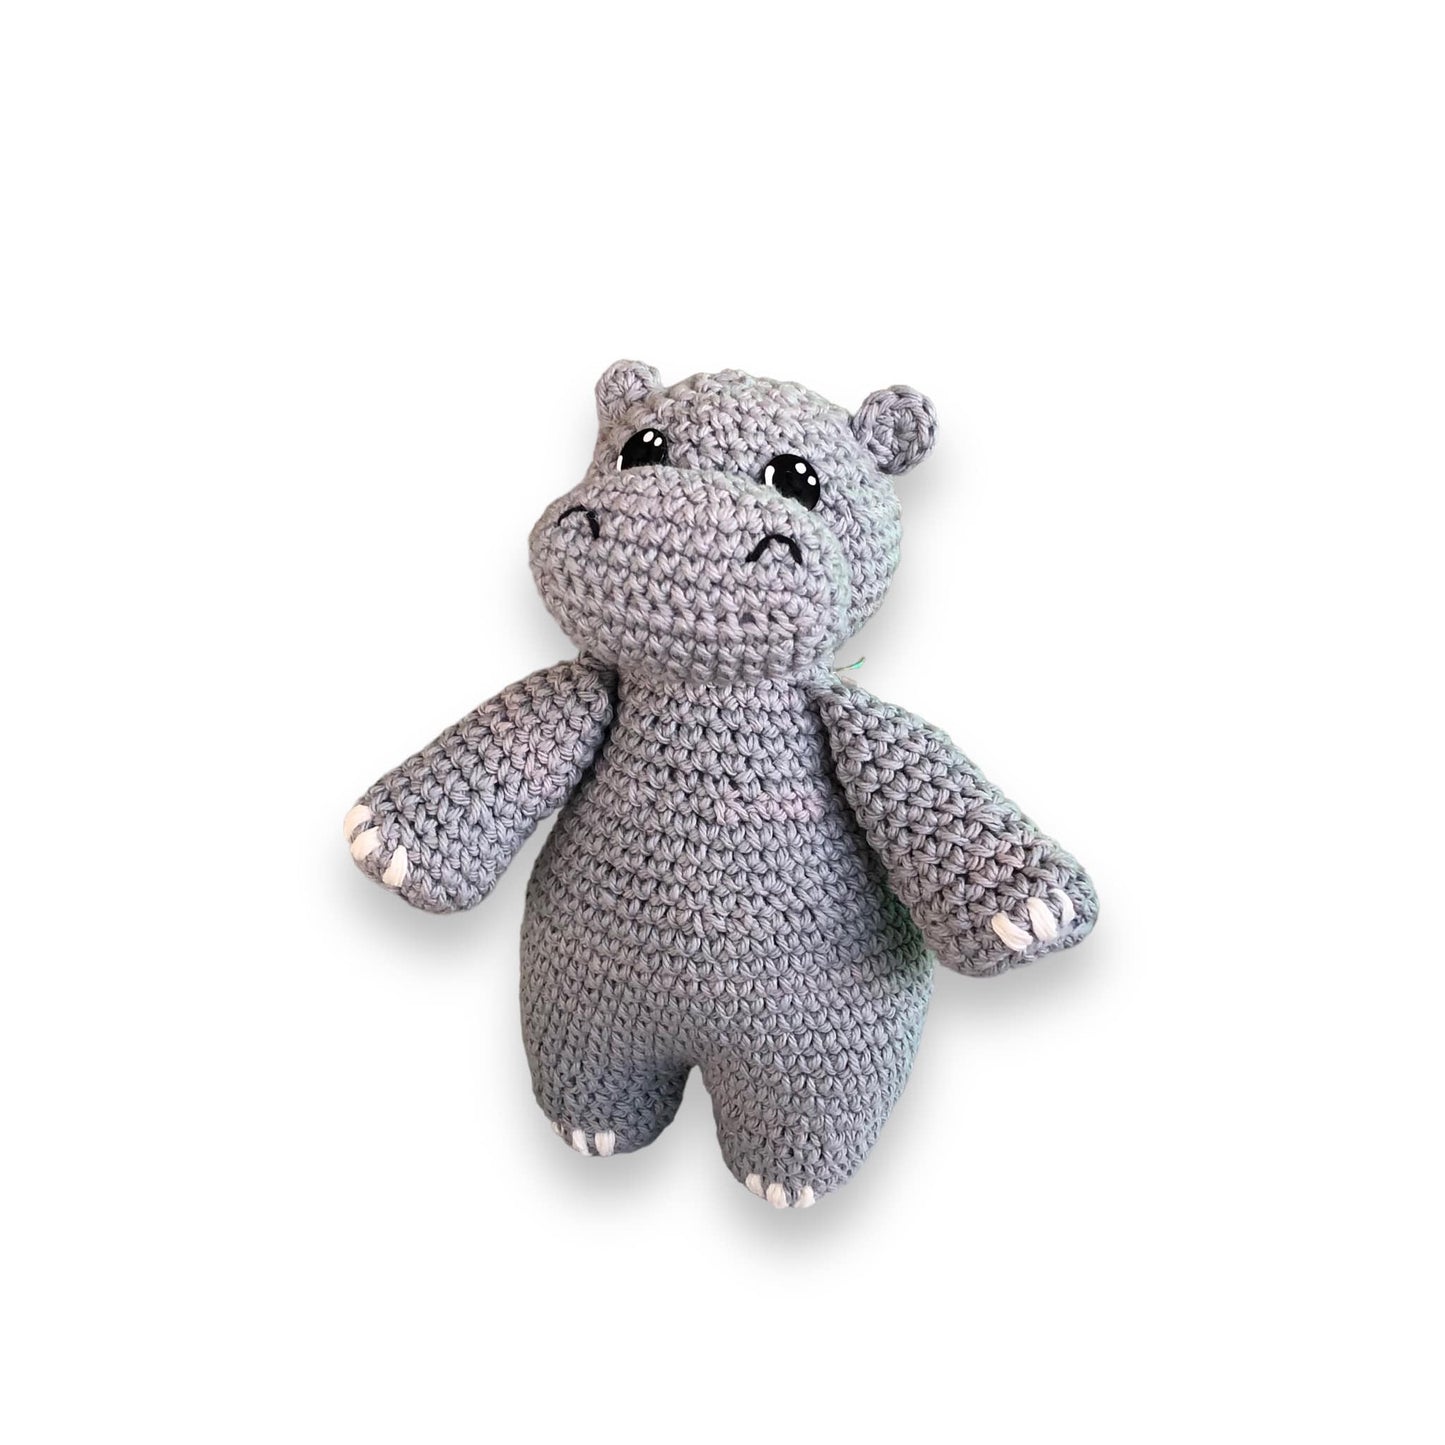 PATTERN: Crochet Hippo with Cute Bum